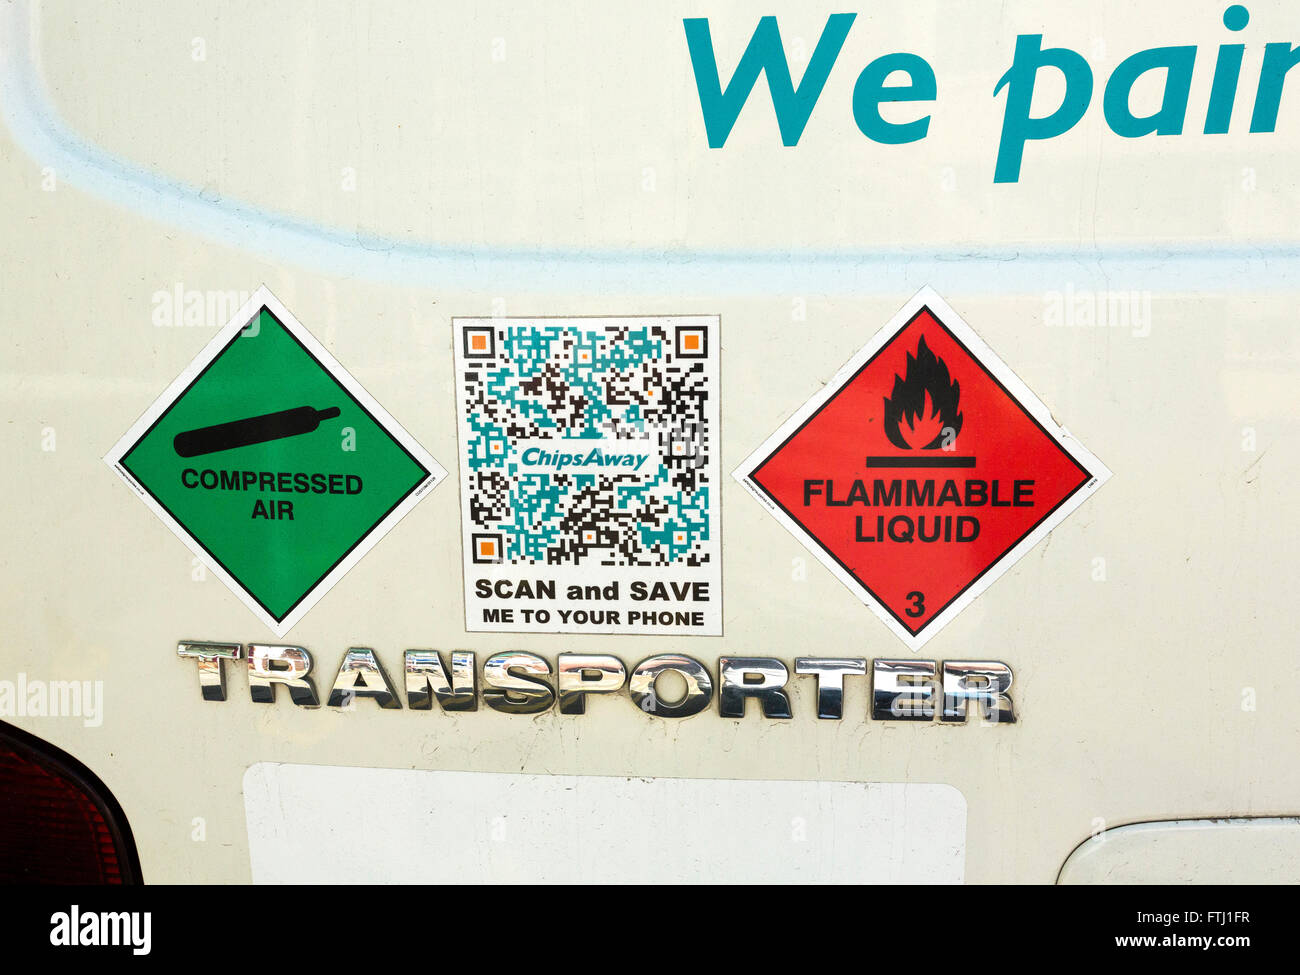 Highly Flammable-Health & Safety Sticker-Warning Hazard Sign-Door,Car,Van,Tanks 